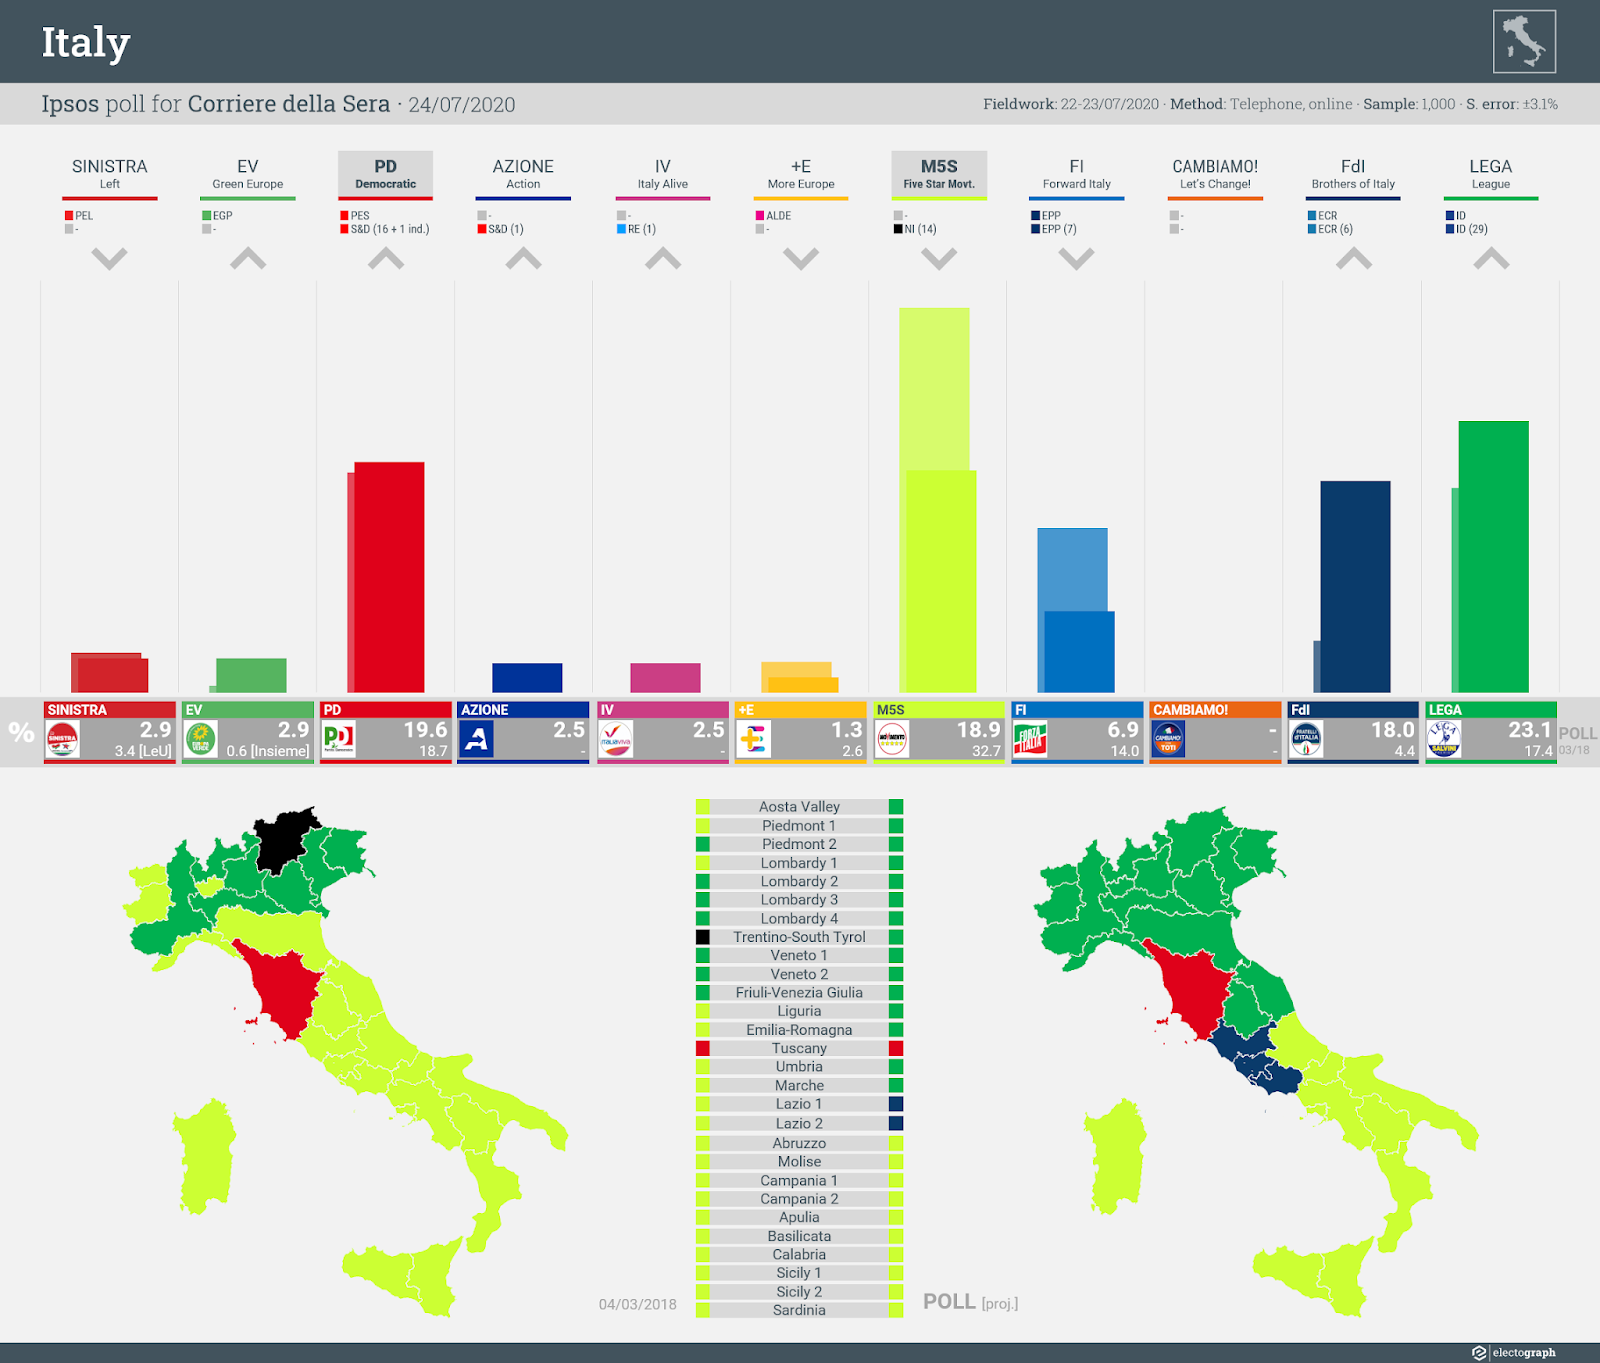 ITALY: Ipsos poll chart for Corriere della Sera, 24 July 2020